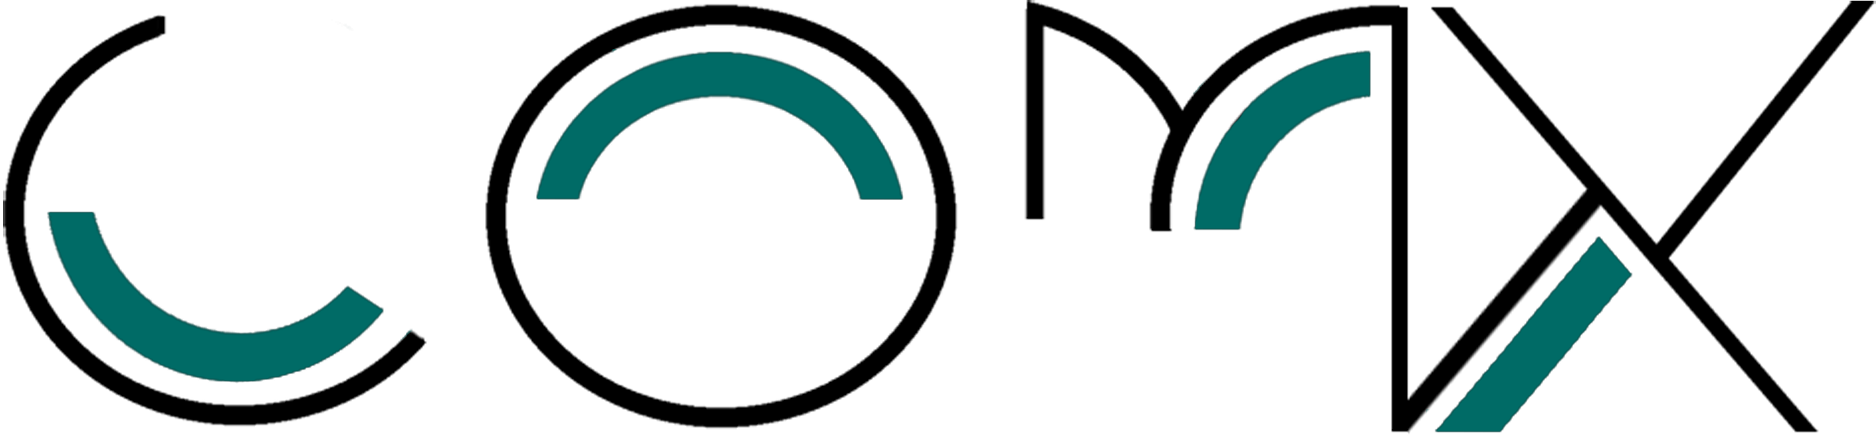 Comx Dark Logo